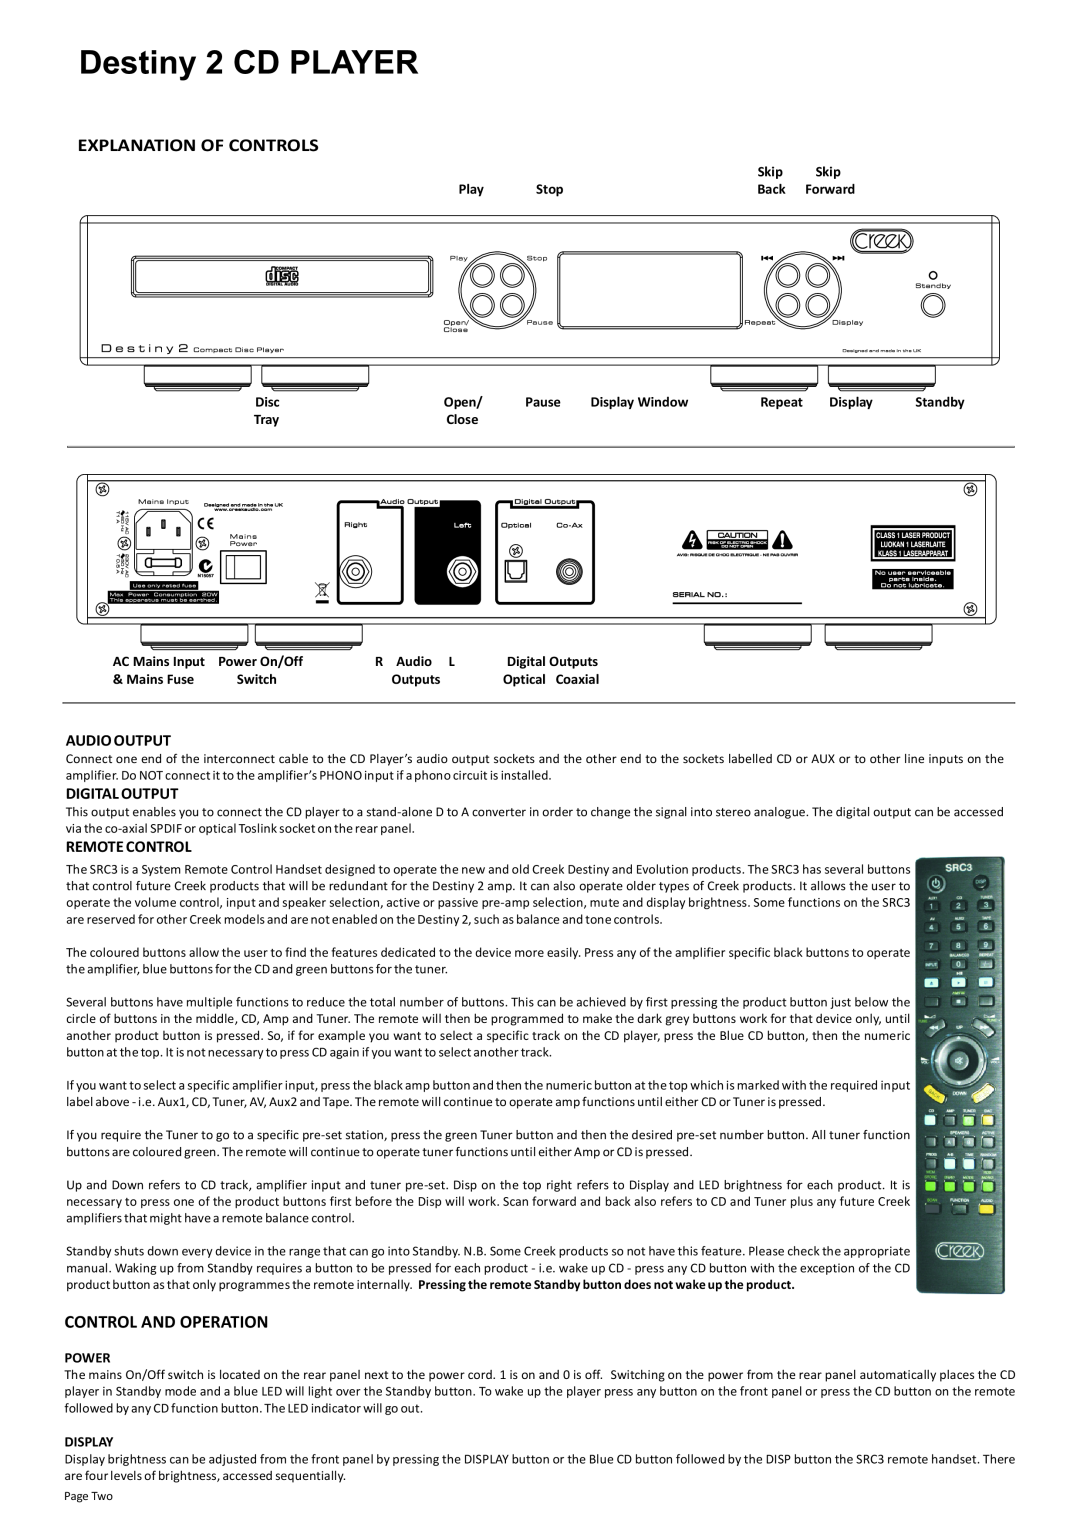 Creek Audio manual Destiny 2 CD PLAYER, Explanation Of Controls, Control And Operation, Audio Output, Digital Output 